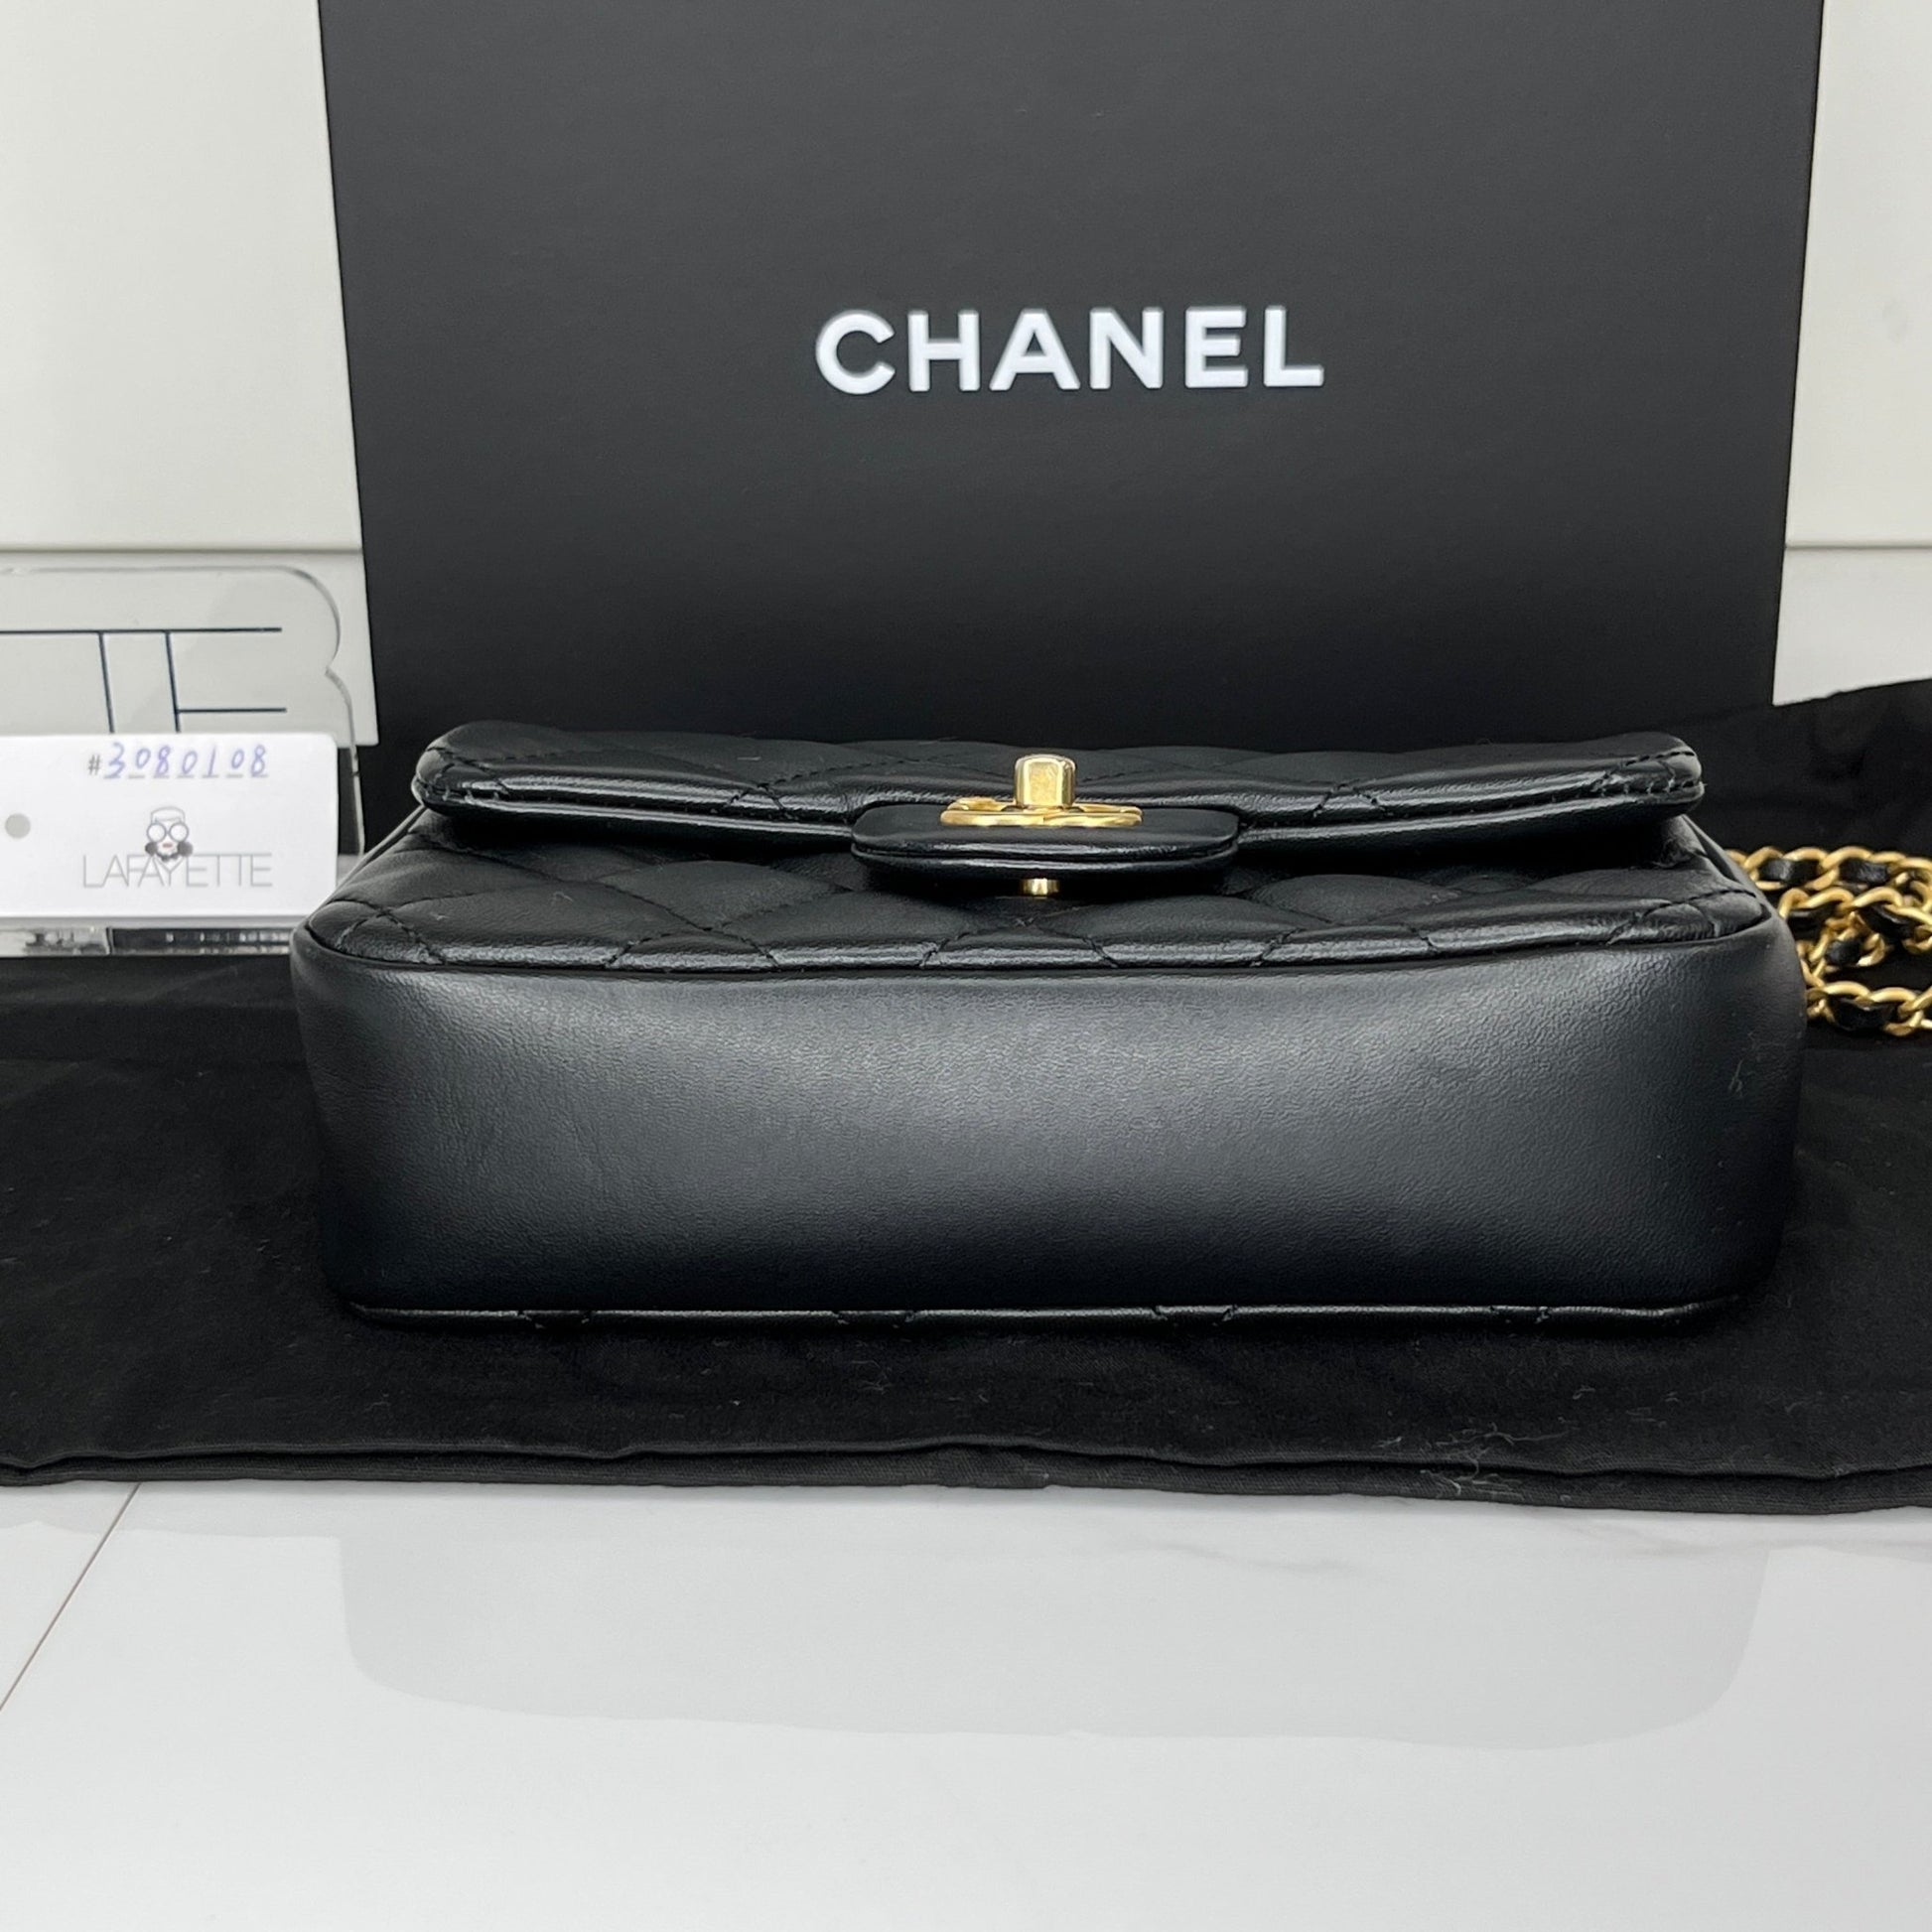 Chanel Mini Flap Bag with Heart Chain